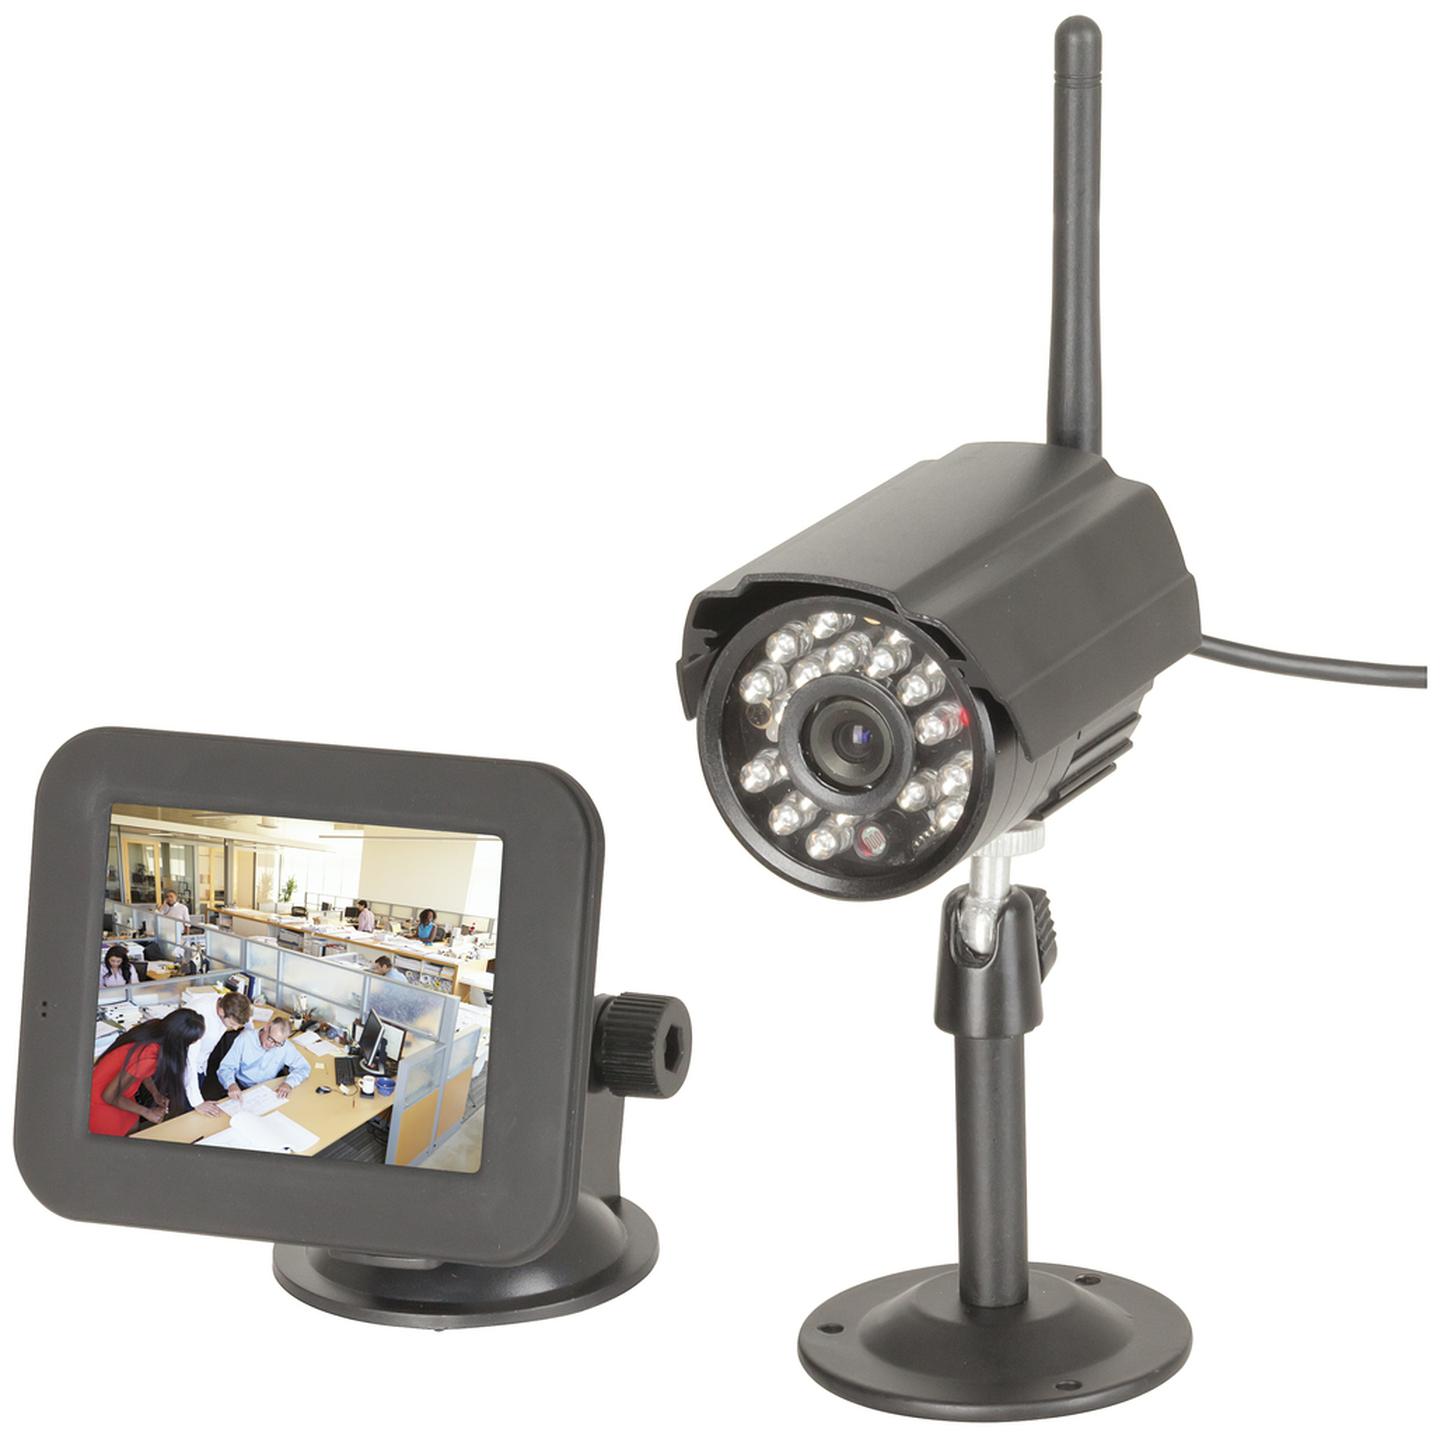 Digital 2.4GHz Wireless 3.5 LCD & Camera Kit